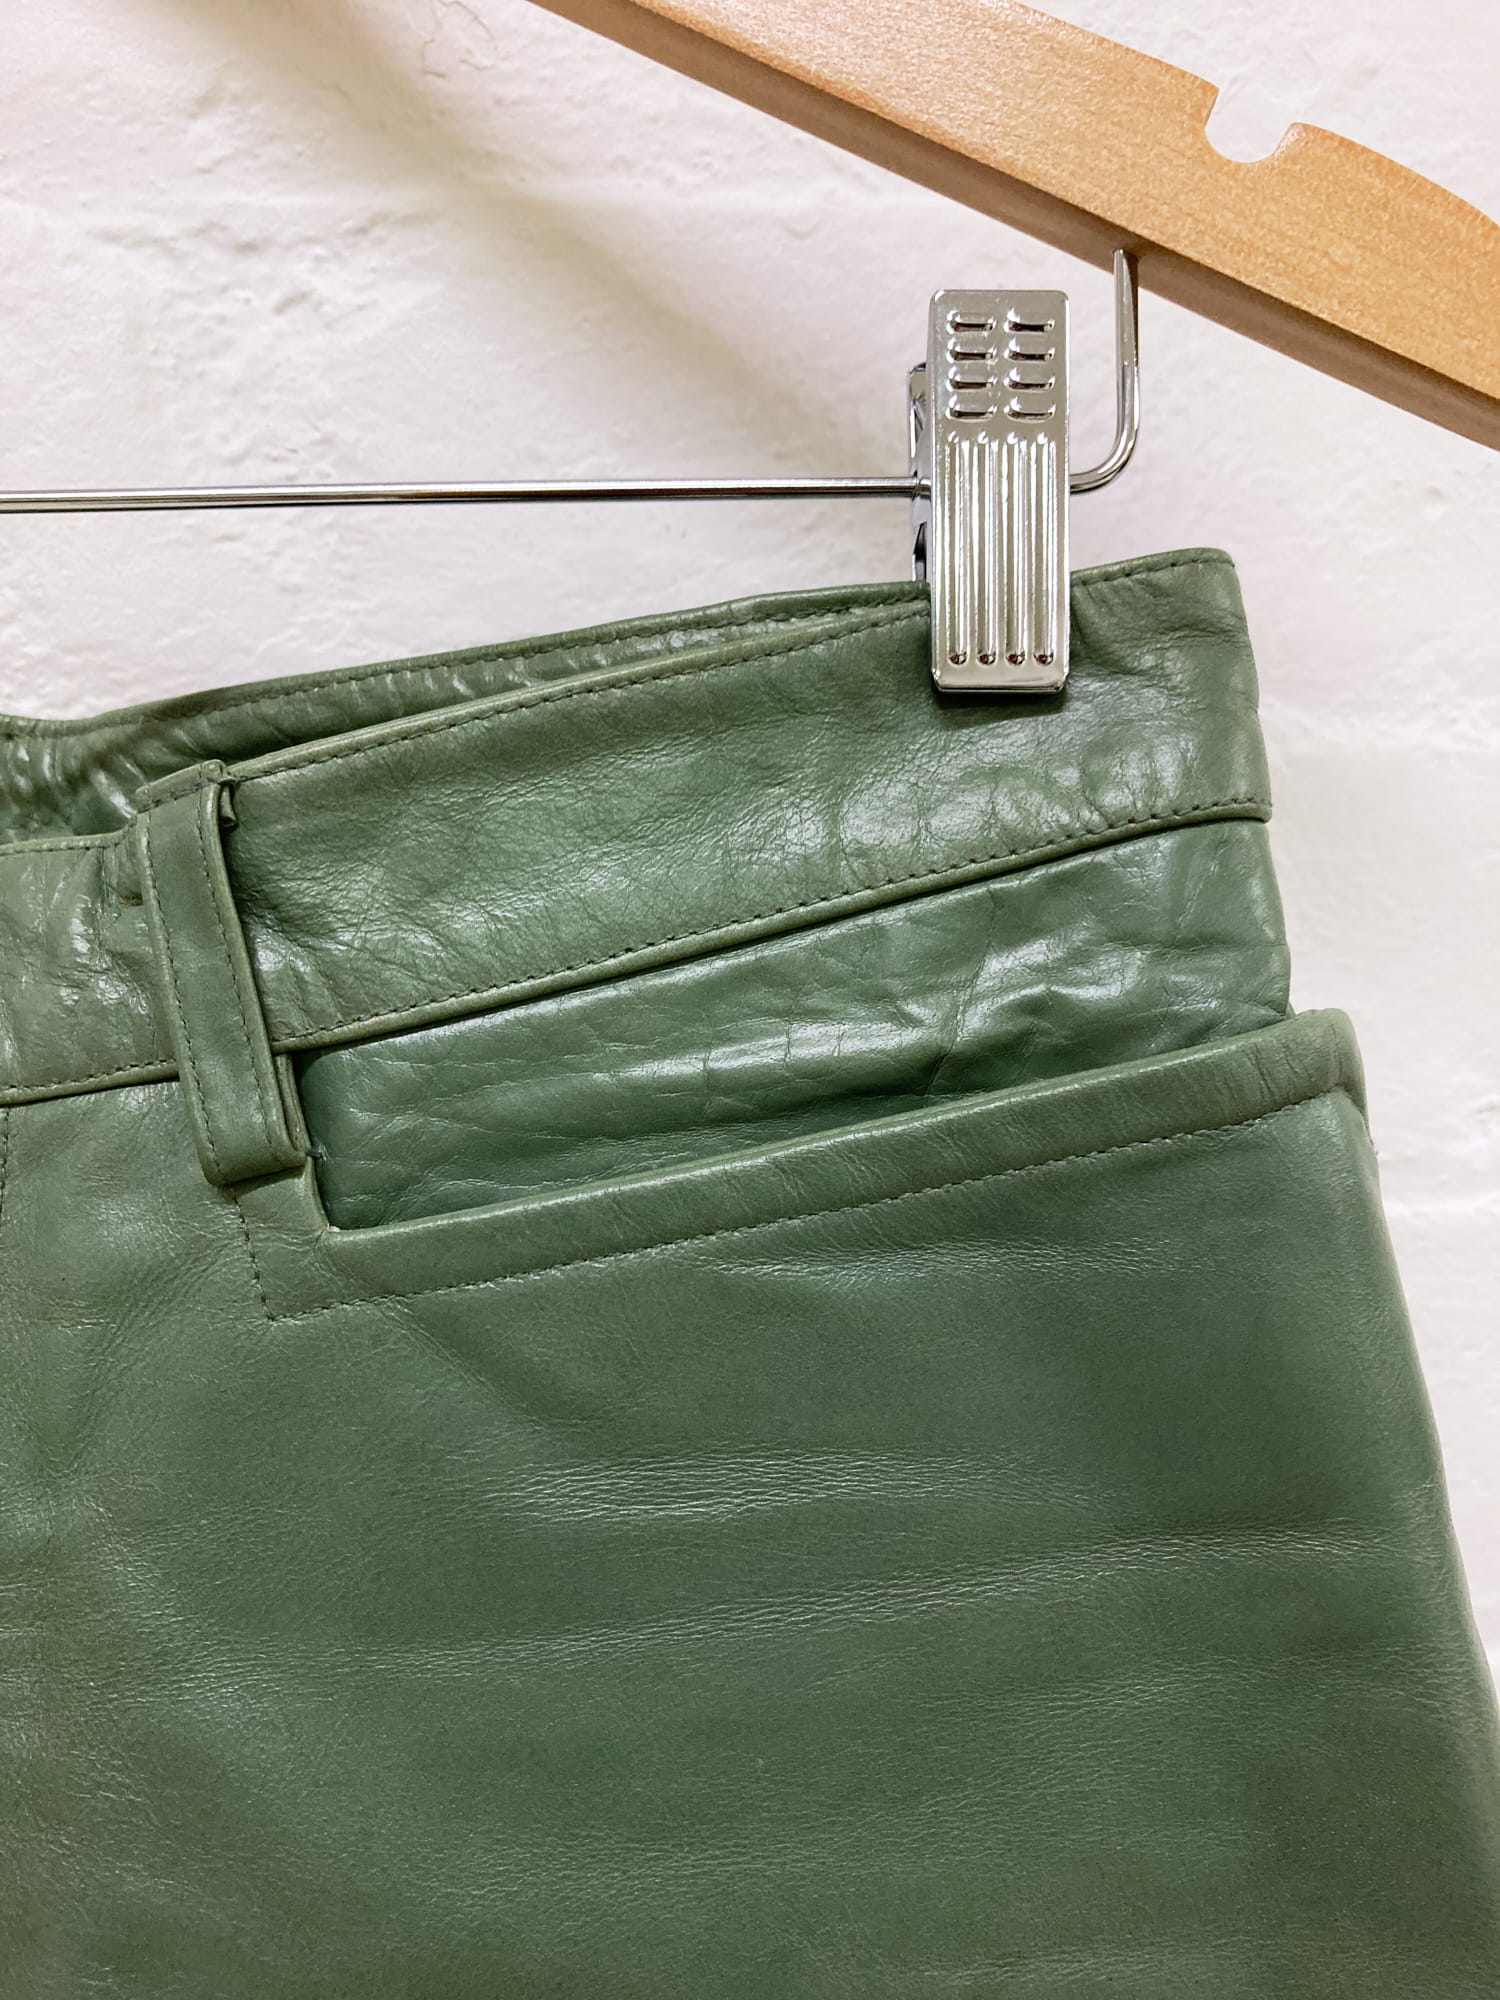 Katharine Hamnett London thick green cowhide leather pants - S XS M